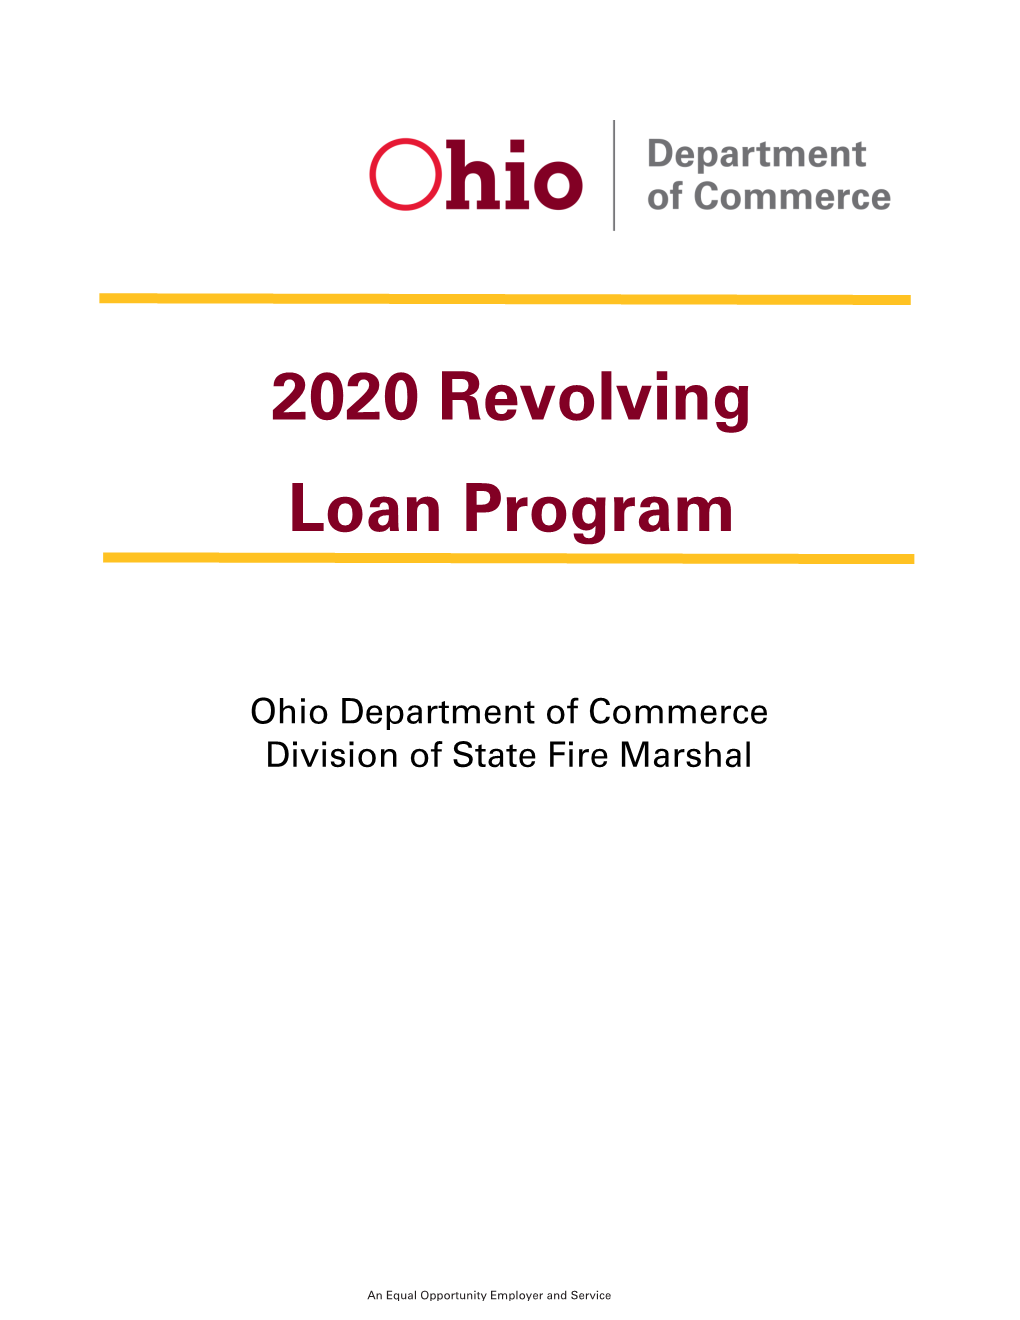 2020 Revolving Loan Program